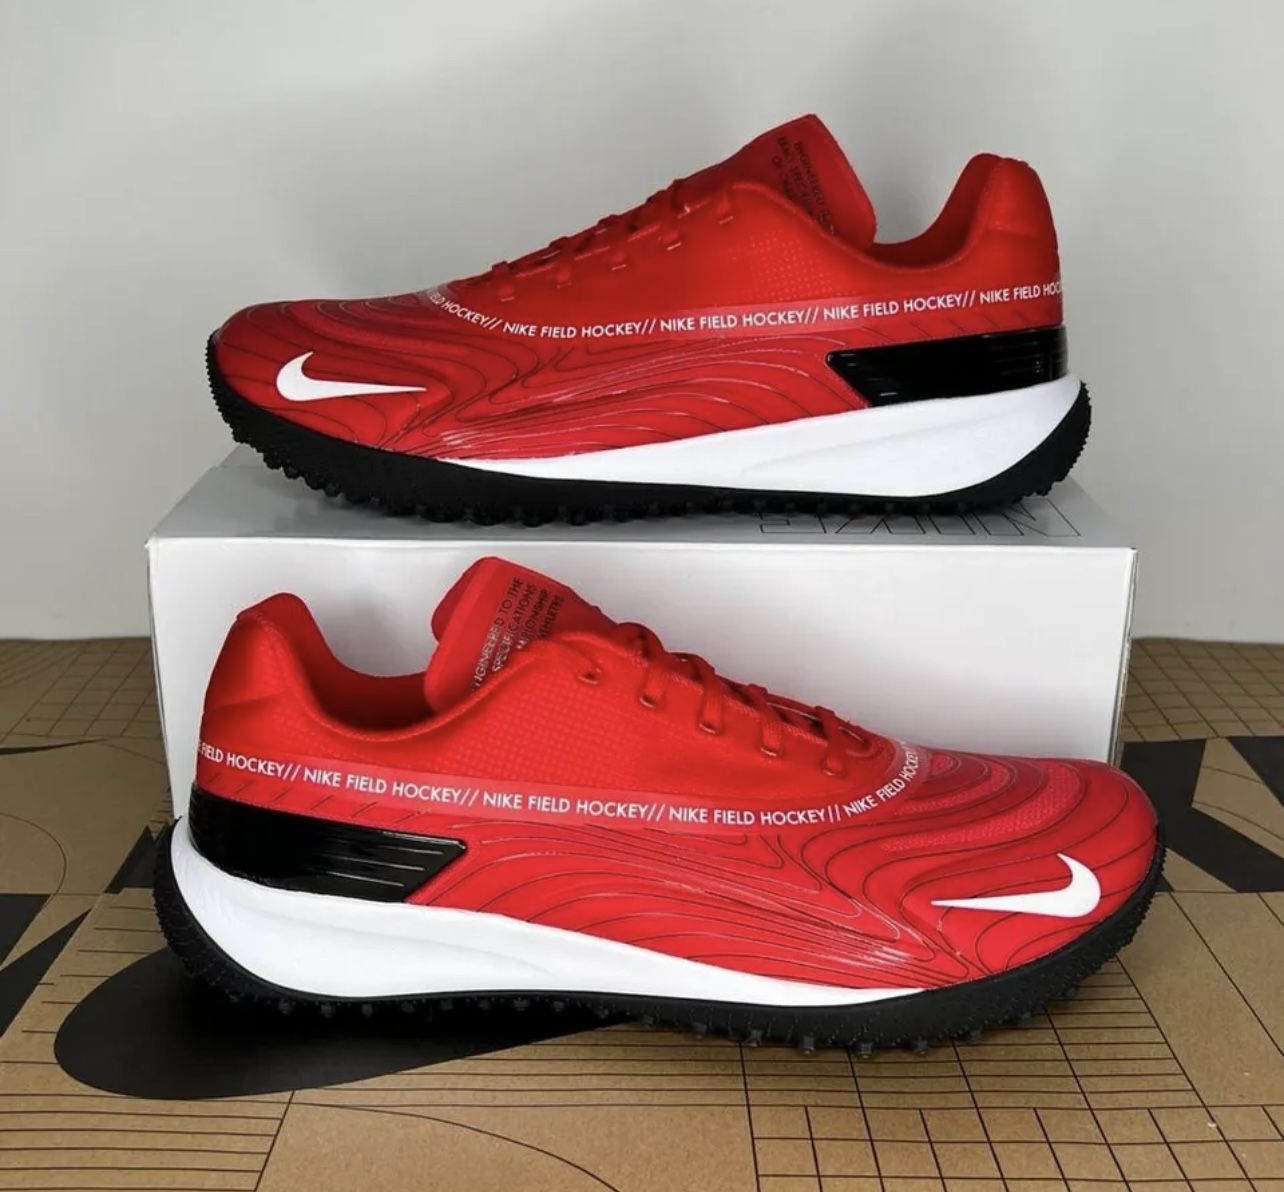 Nike Vapor Drive Turf Field Hockey Red Shoes MEN'S for Sale Riverside, CA - OfferUp